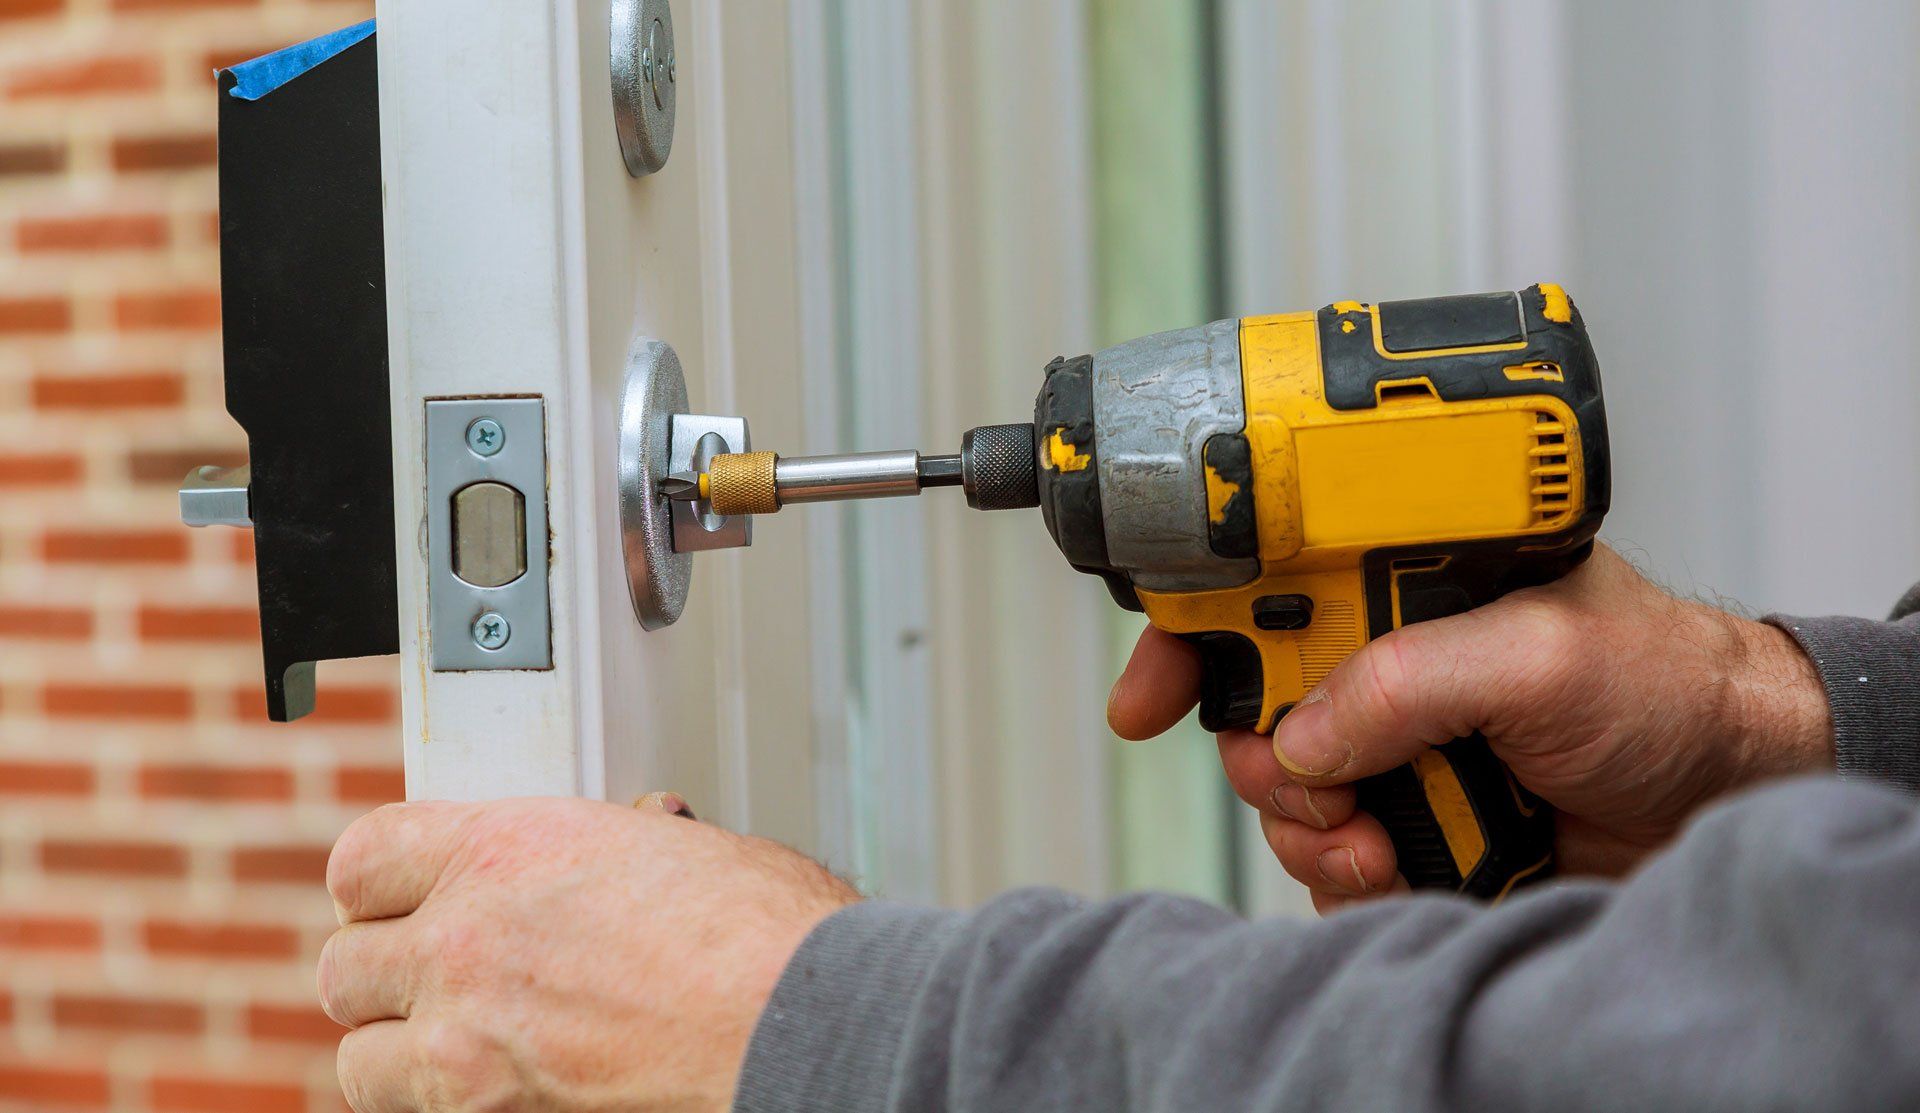 locksmith using lockpick tools to open wood door in emergency time